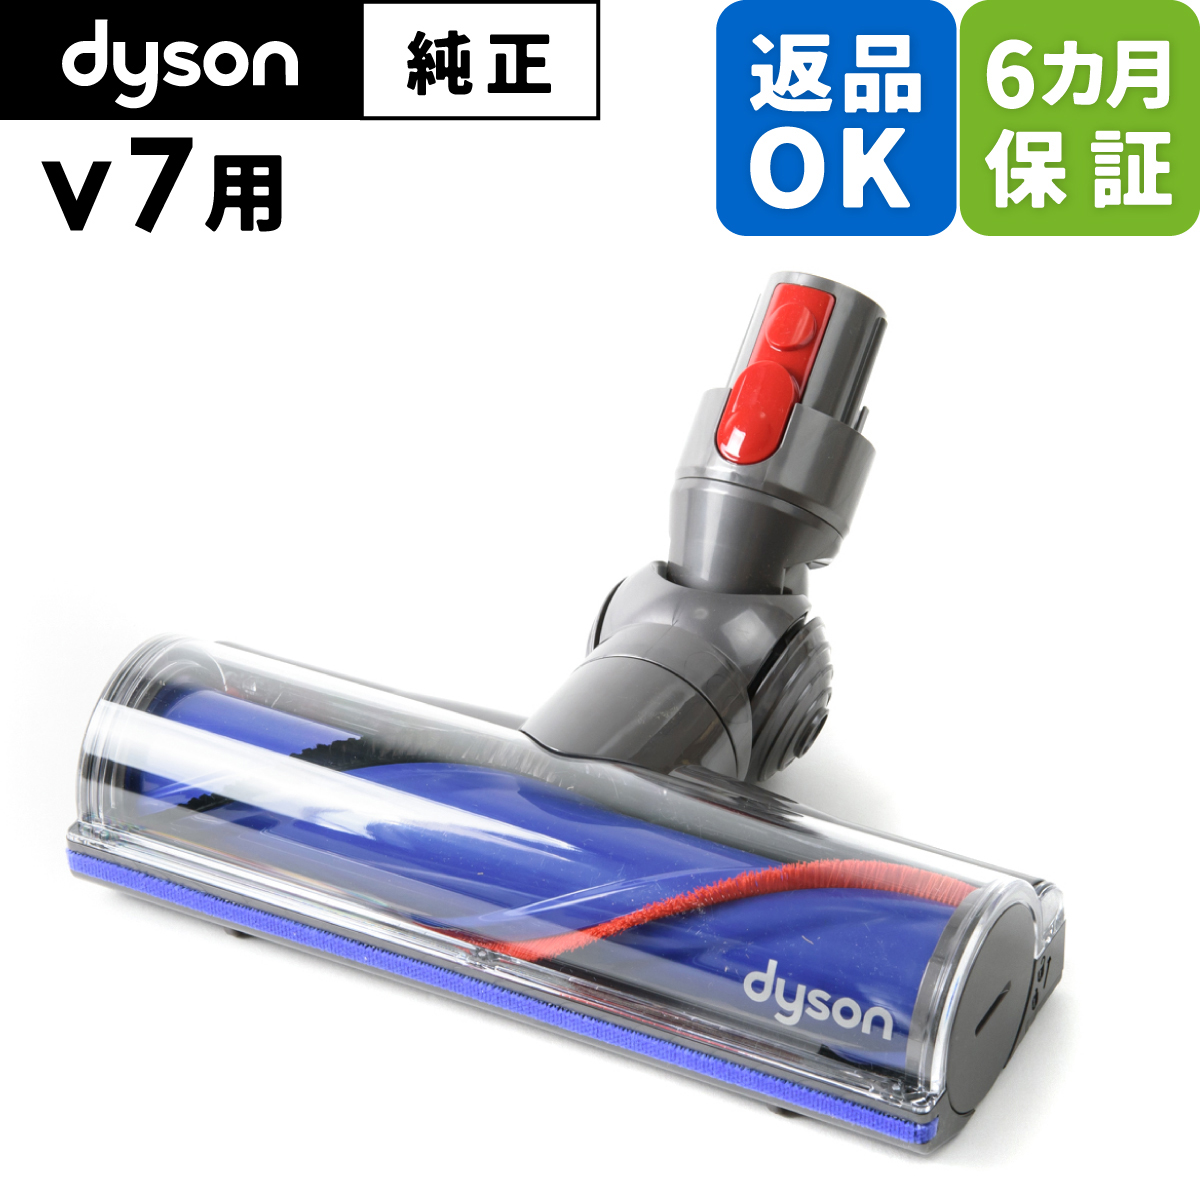  Dyson ダイソン 純正 パーツ ダイレクトドライブクリーナーヘッド V7 適合 モデル 掃除機 部品 交換  ※slim対象外